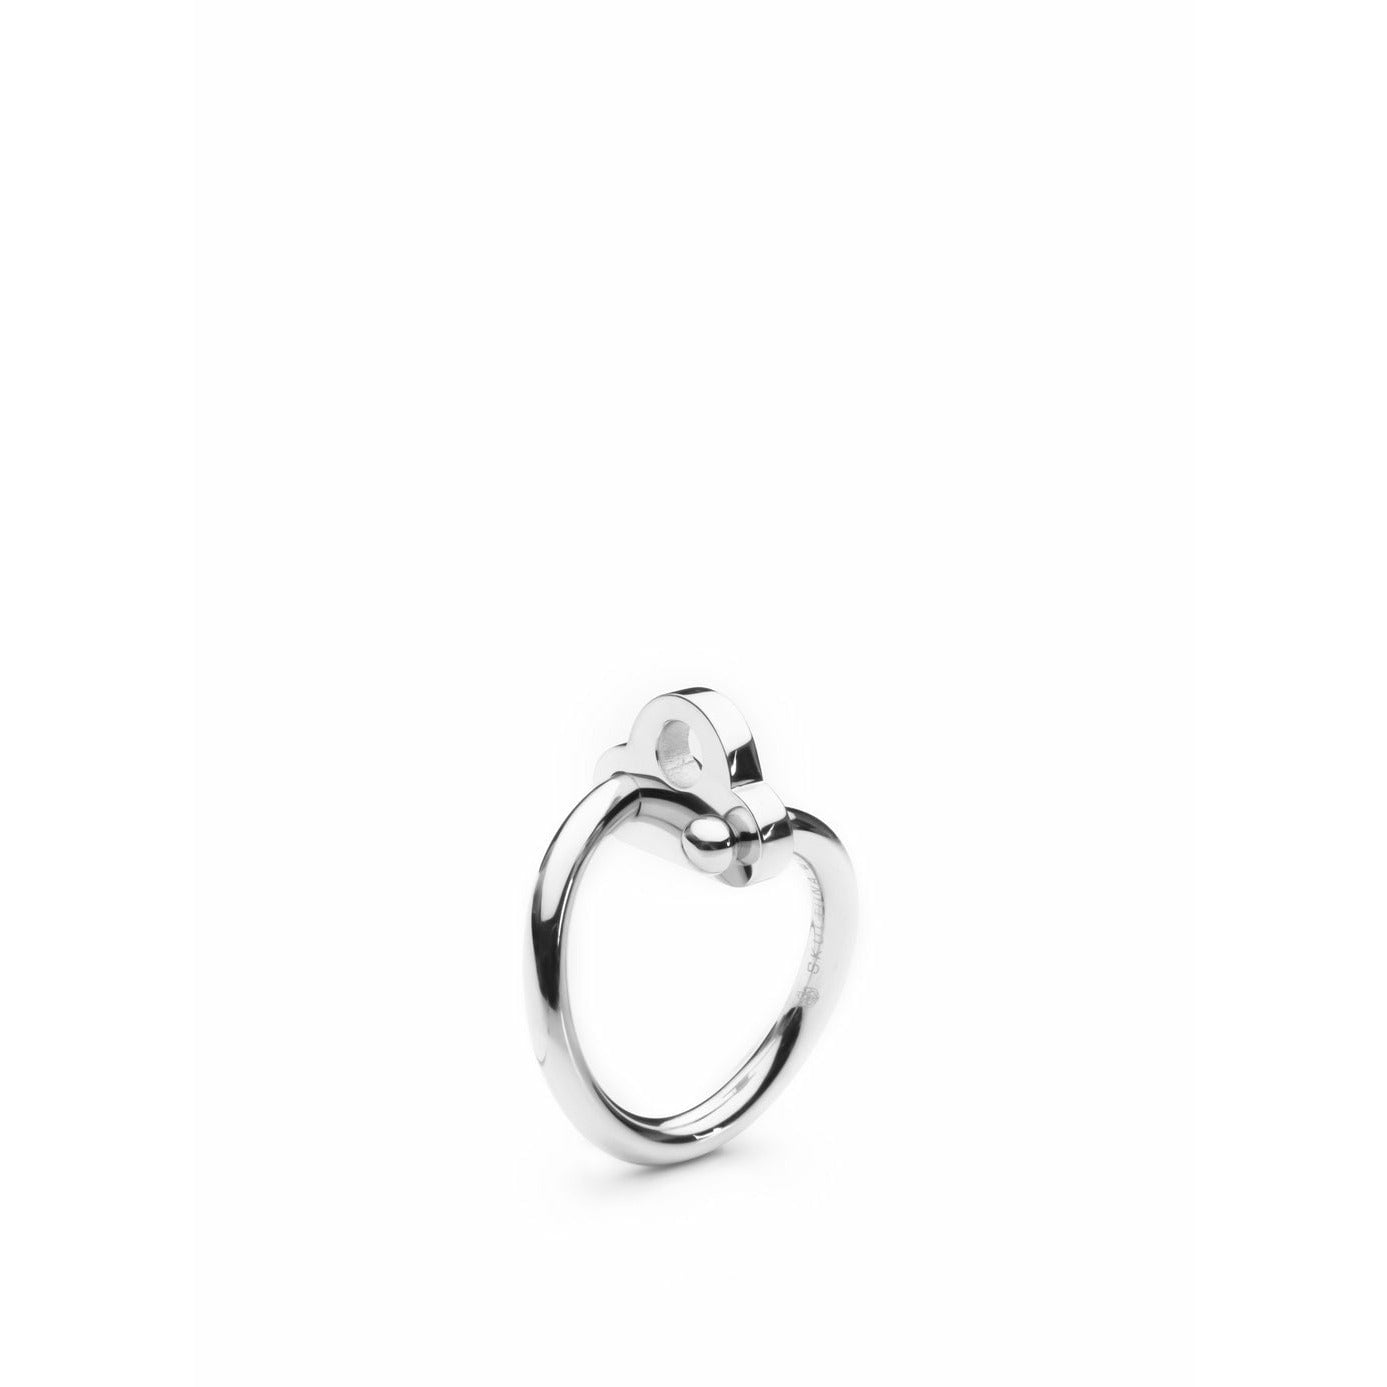 Skultuna Key Ring Acero pulido mediano, Ø1,81 cm